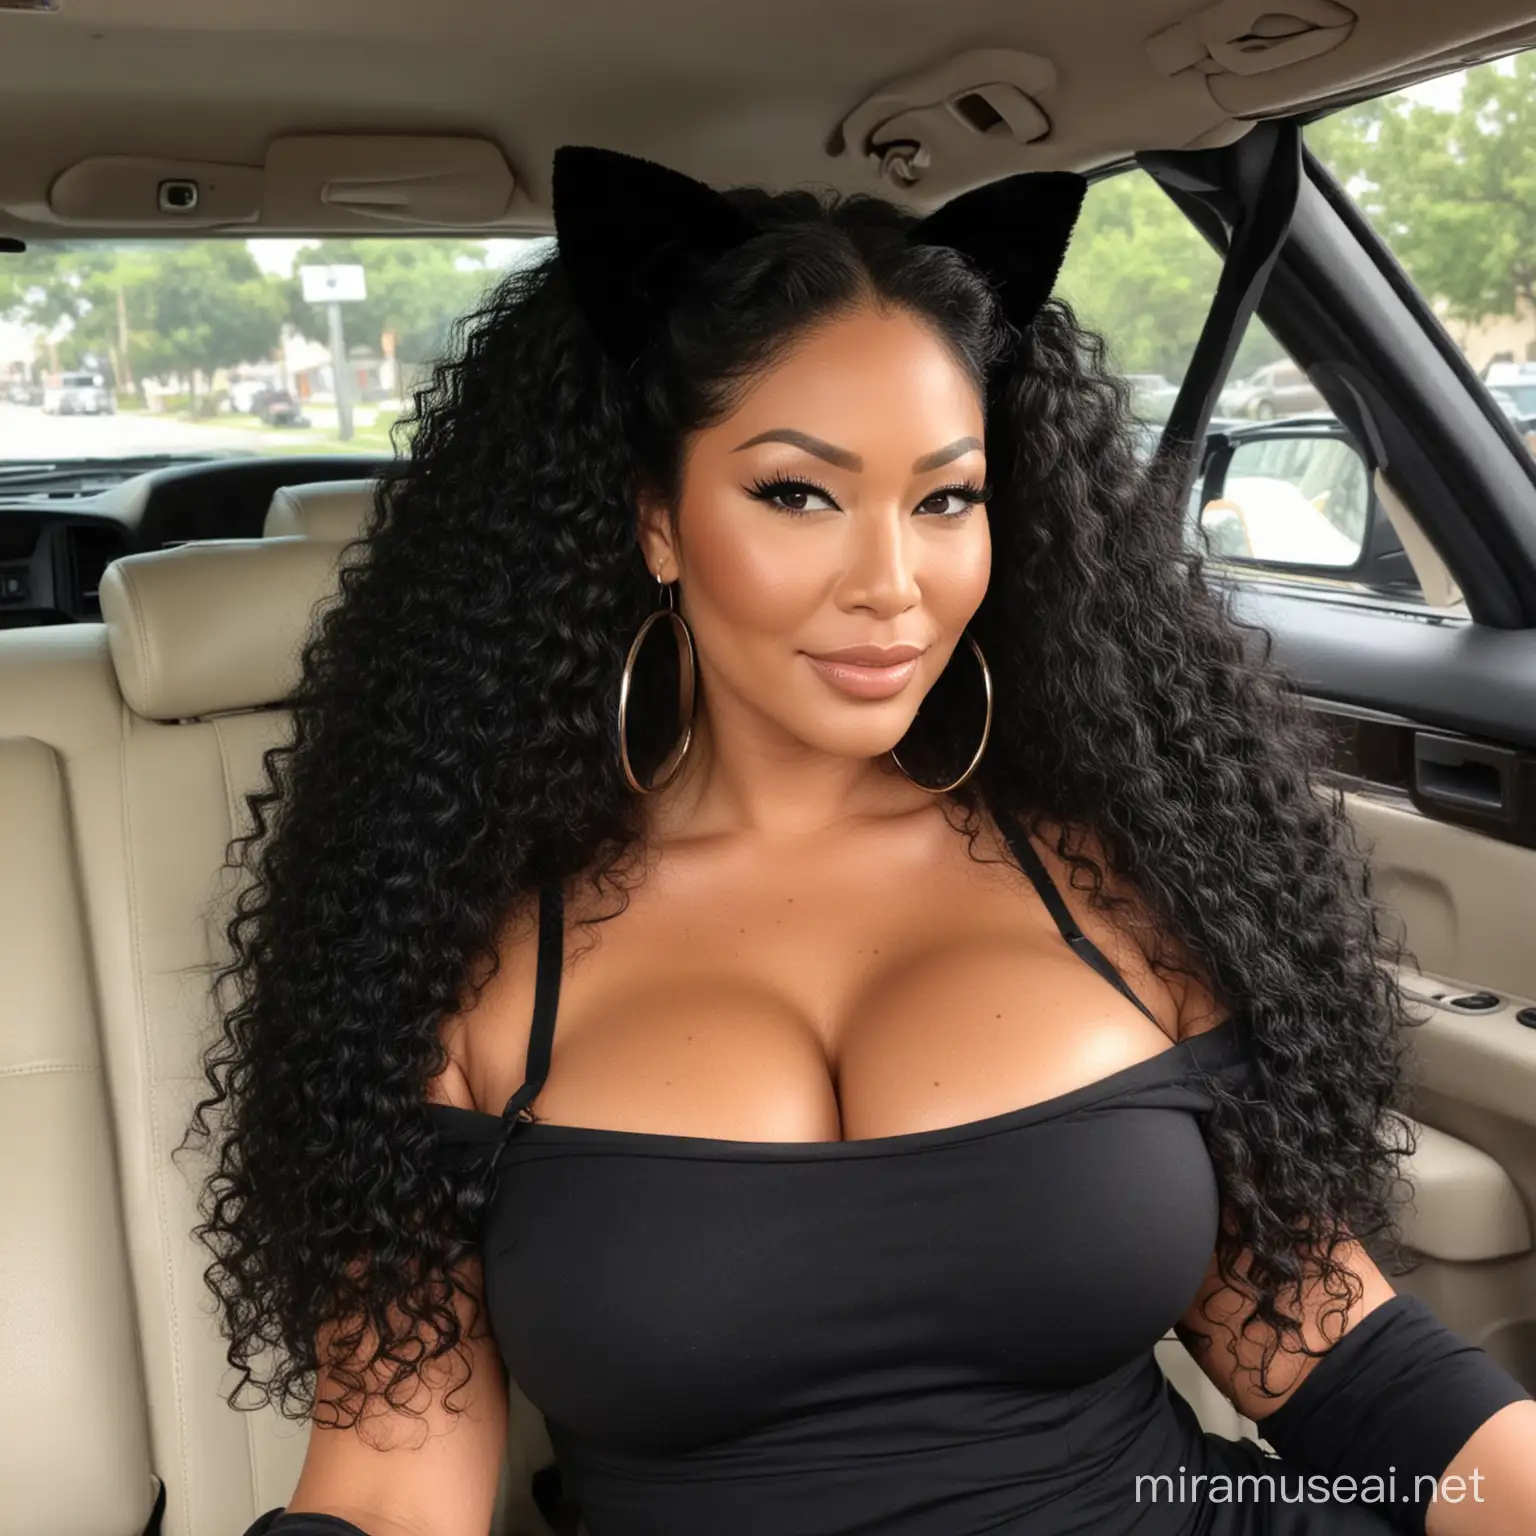 Kimora Lee Simmons, wearing black cat ears, in the back seat of a car, wearing large hoop earrings, kinky hair, bbw, giant breasts, massive cleavage